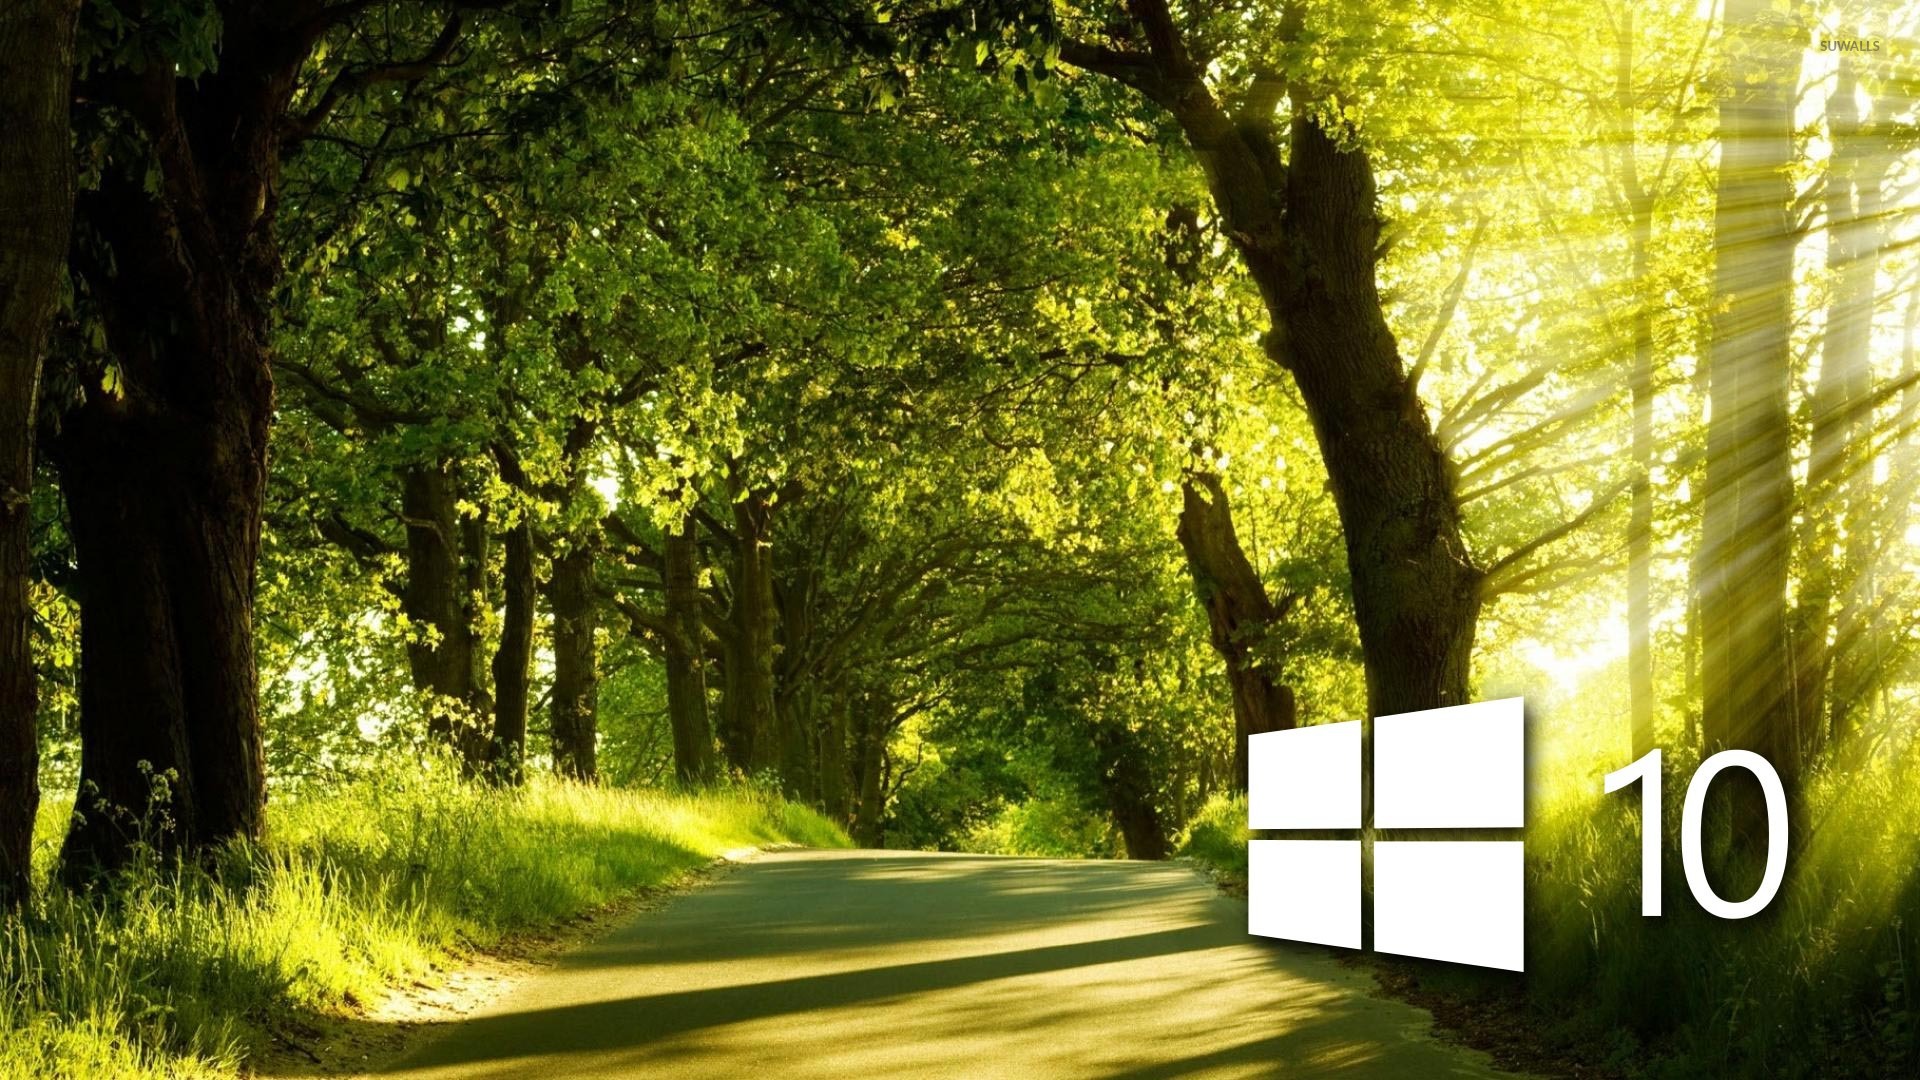 Windows 10 wallpaper themes - jesiron